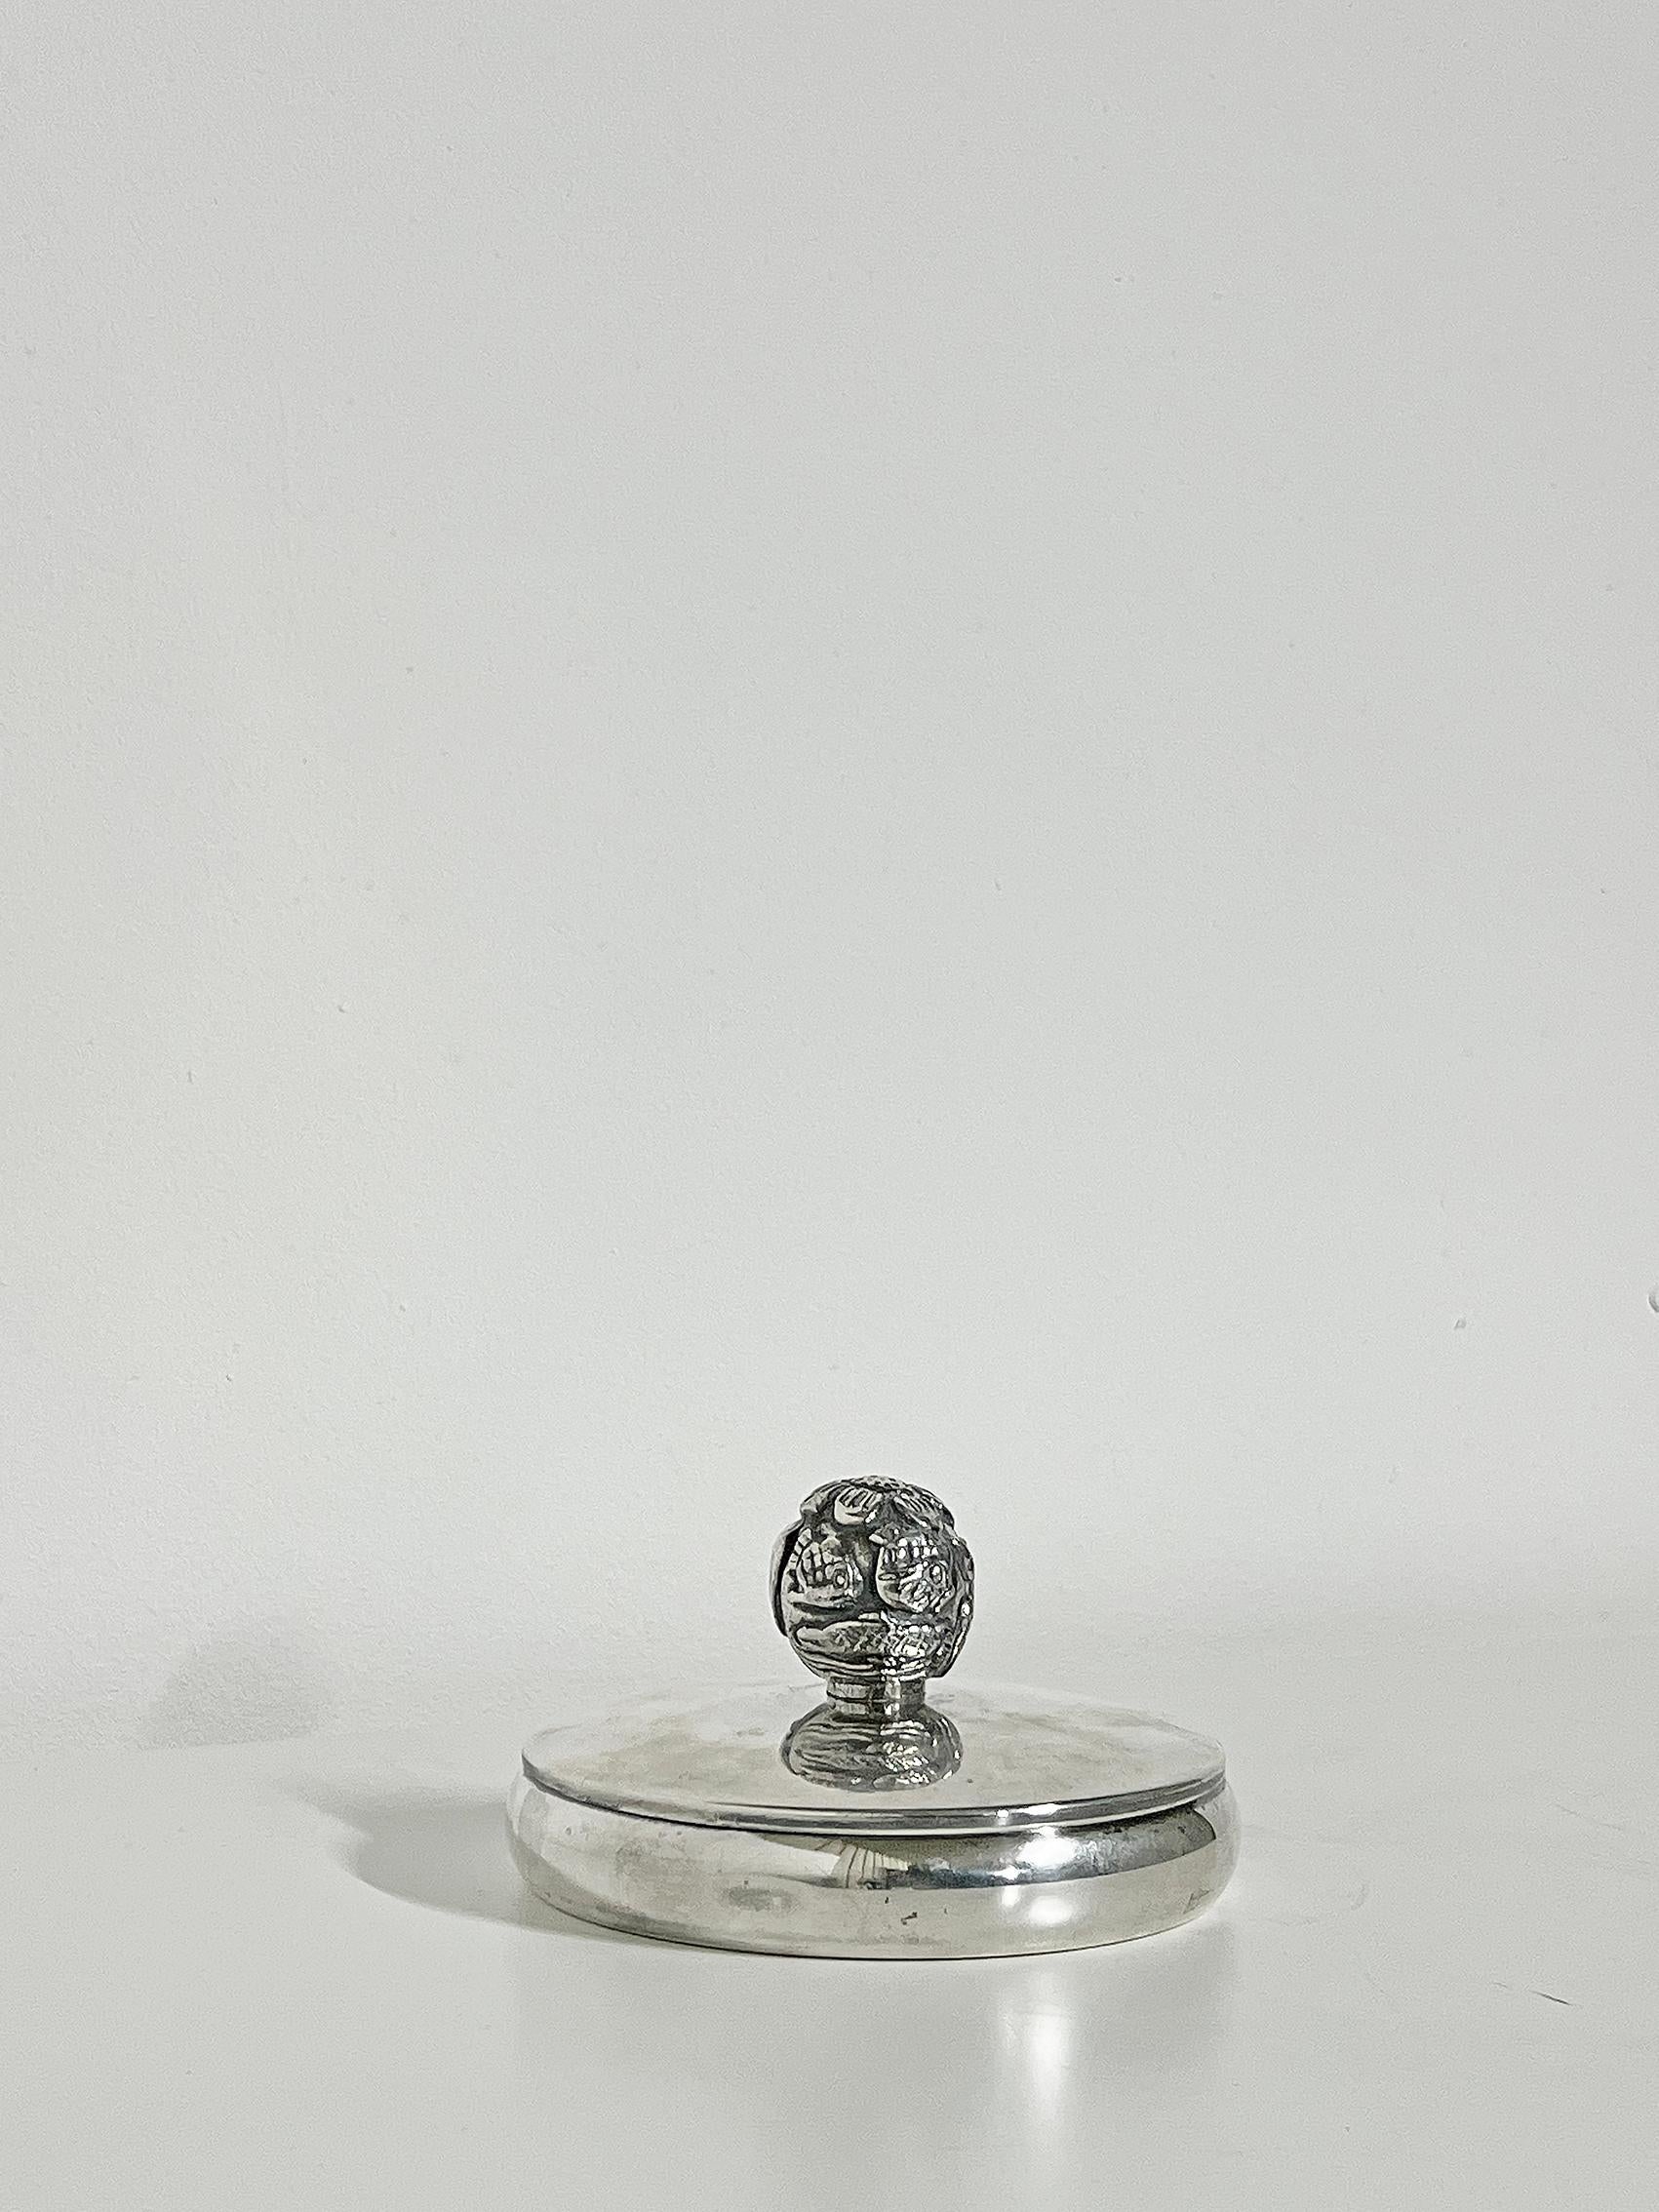 Scandinavian Modern Swedish Modern Jar in Silver Plate, Carl Einar Borgström for Ystad-Metall, 1930s For Sale